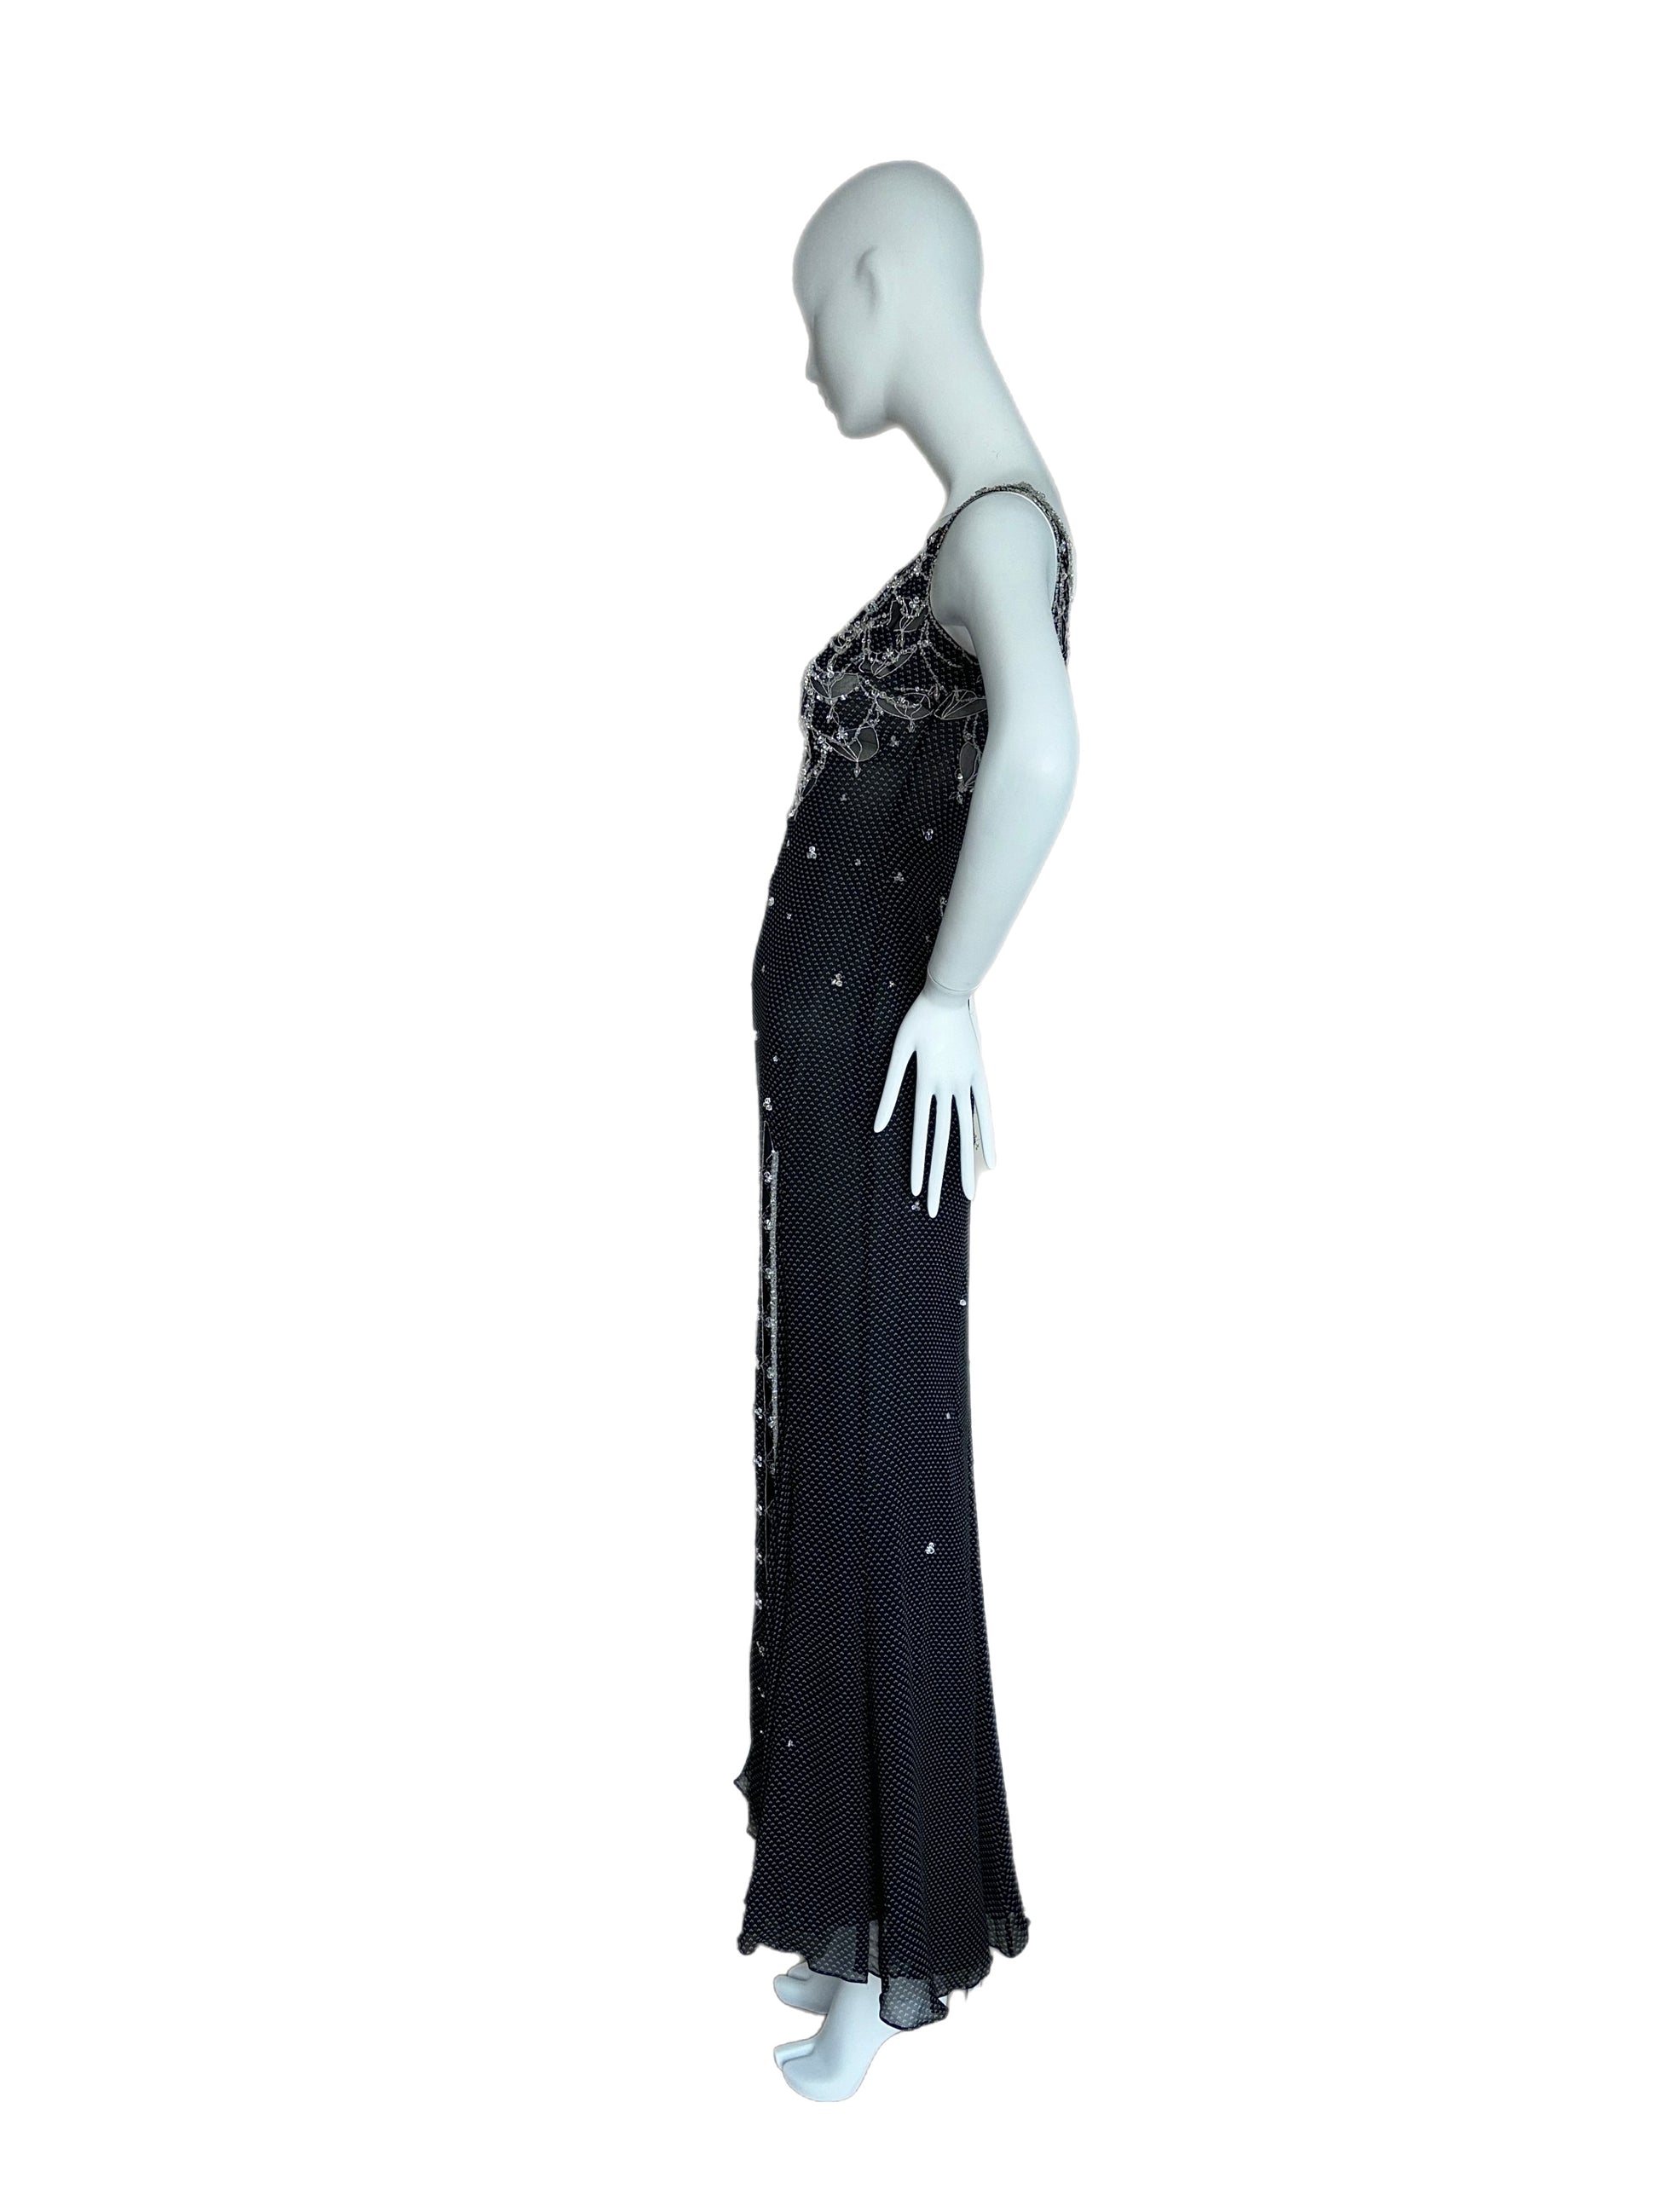 badgley mischka 2002 vintage runway embellished evening gown maxi dress